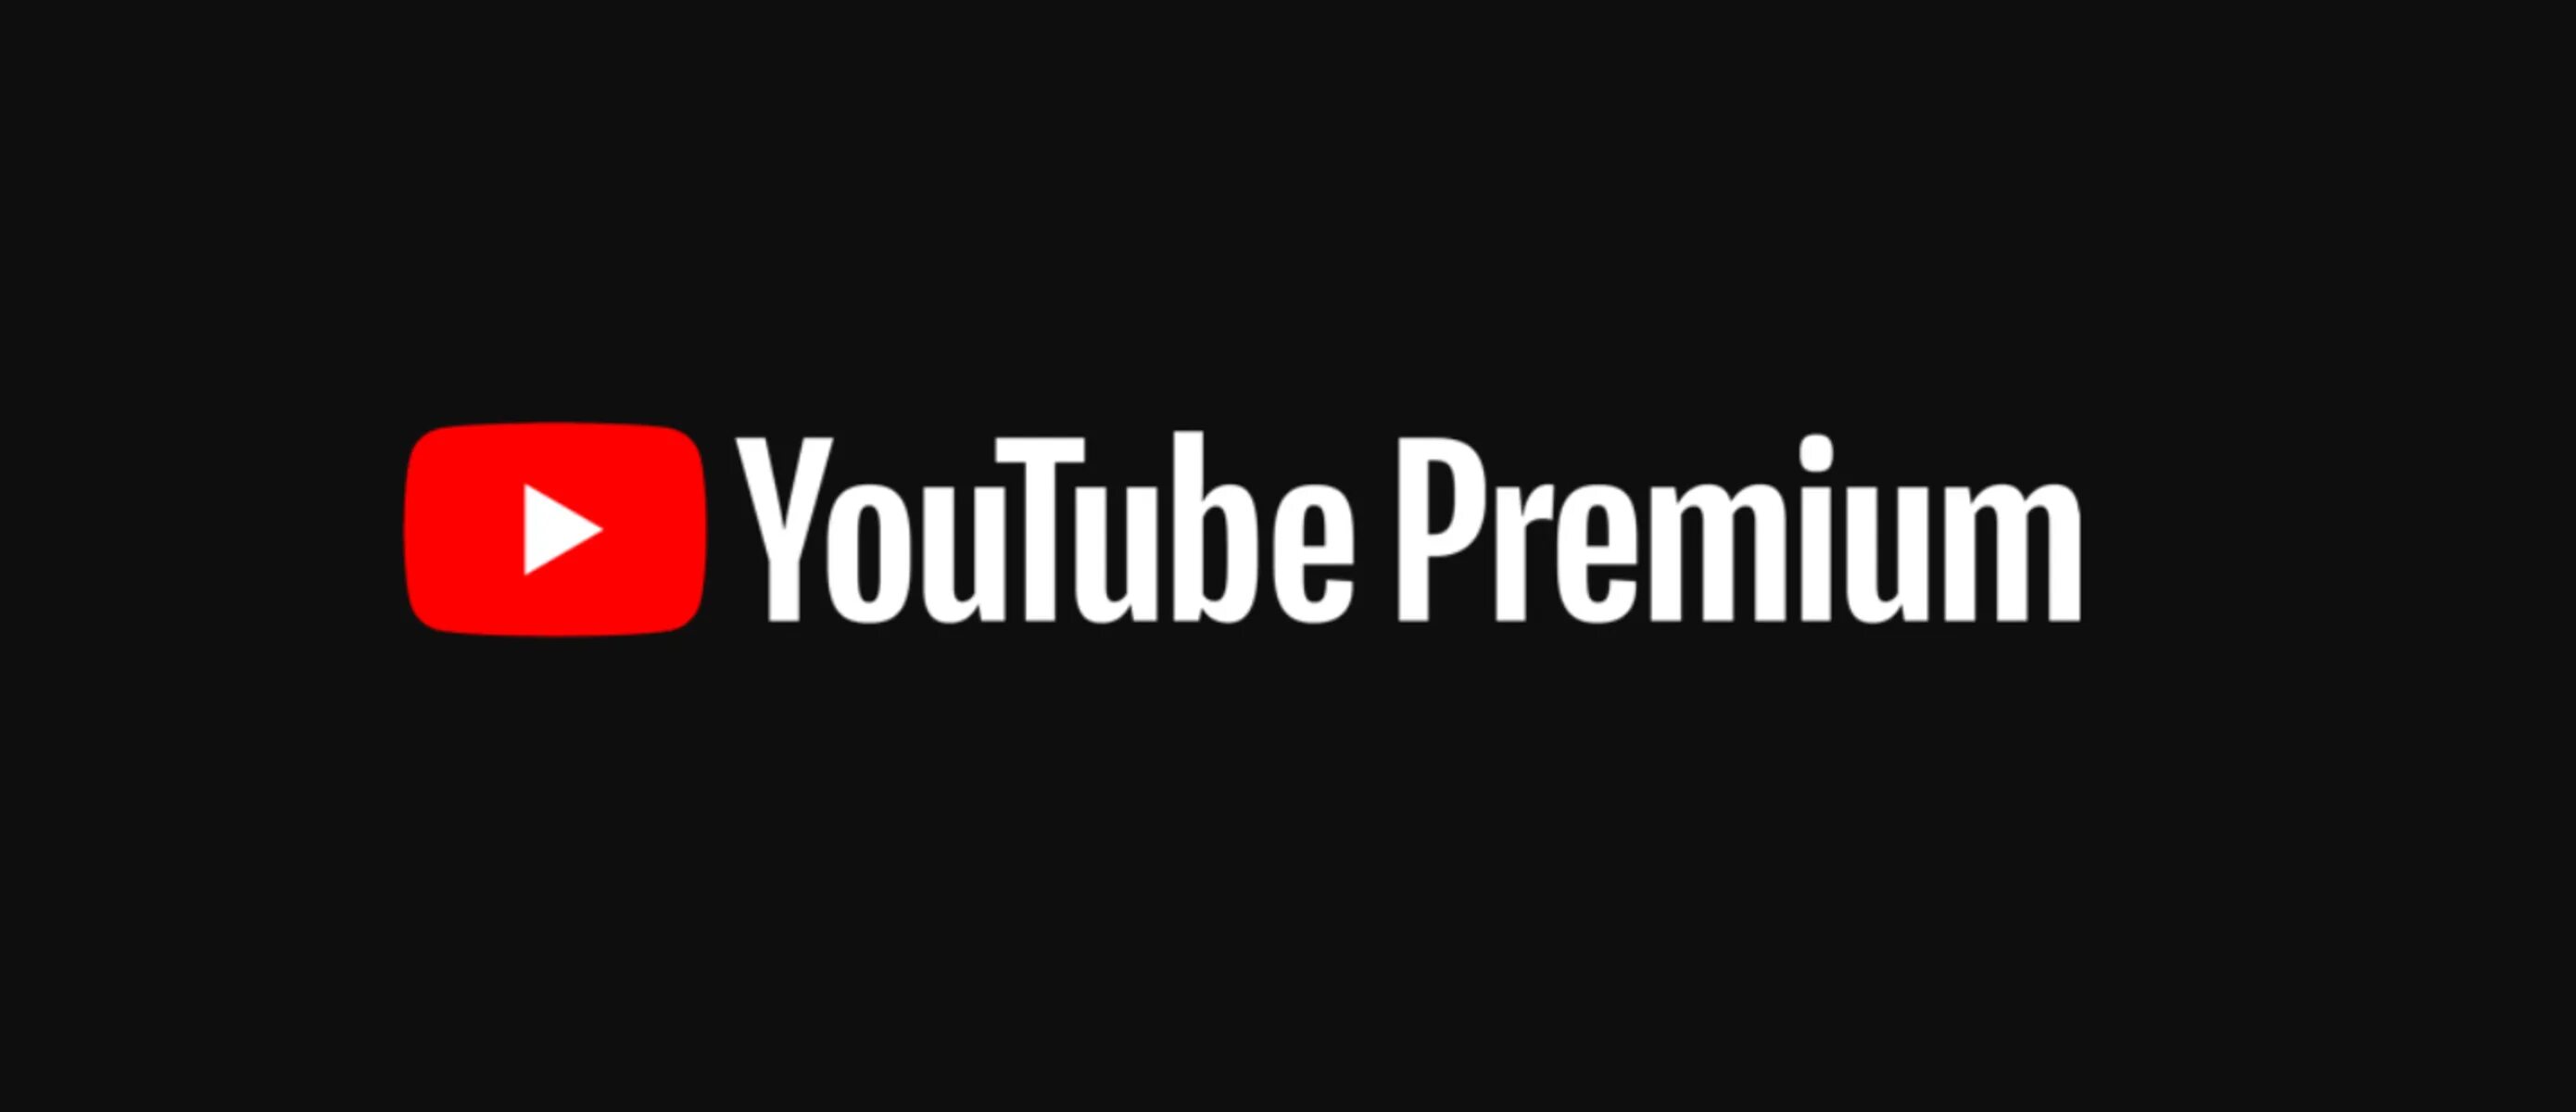 Youtube Premium. Ютуб премиум. Ютуб премиум логотип. Youtube фото.